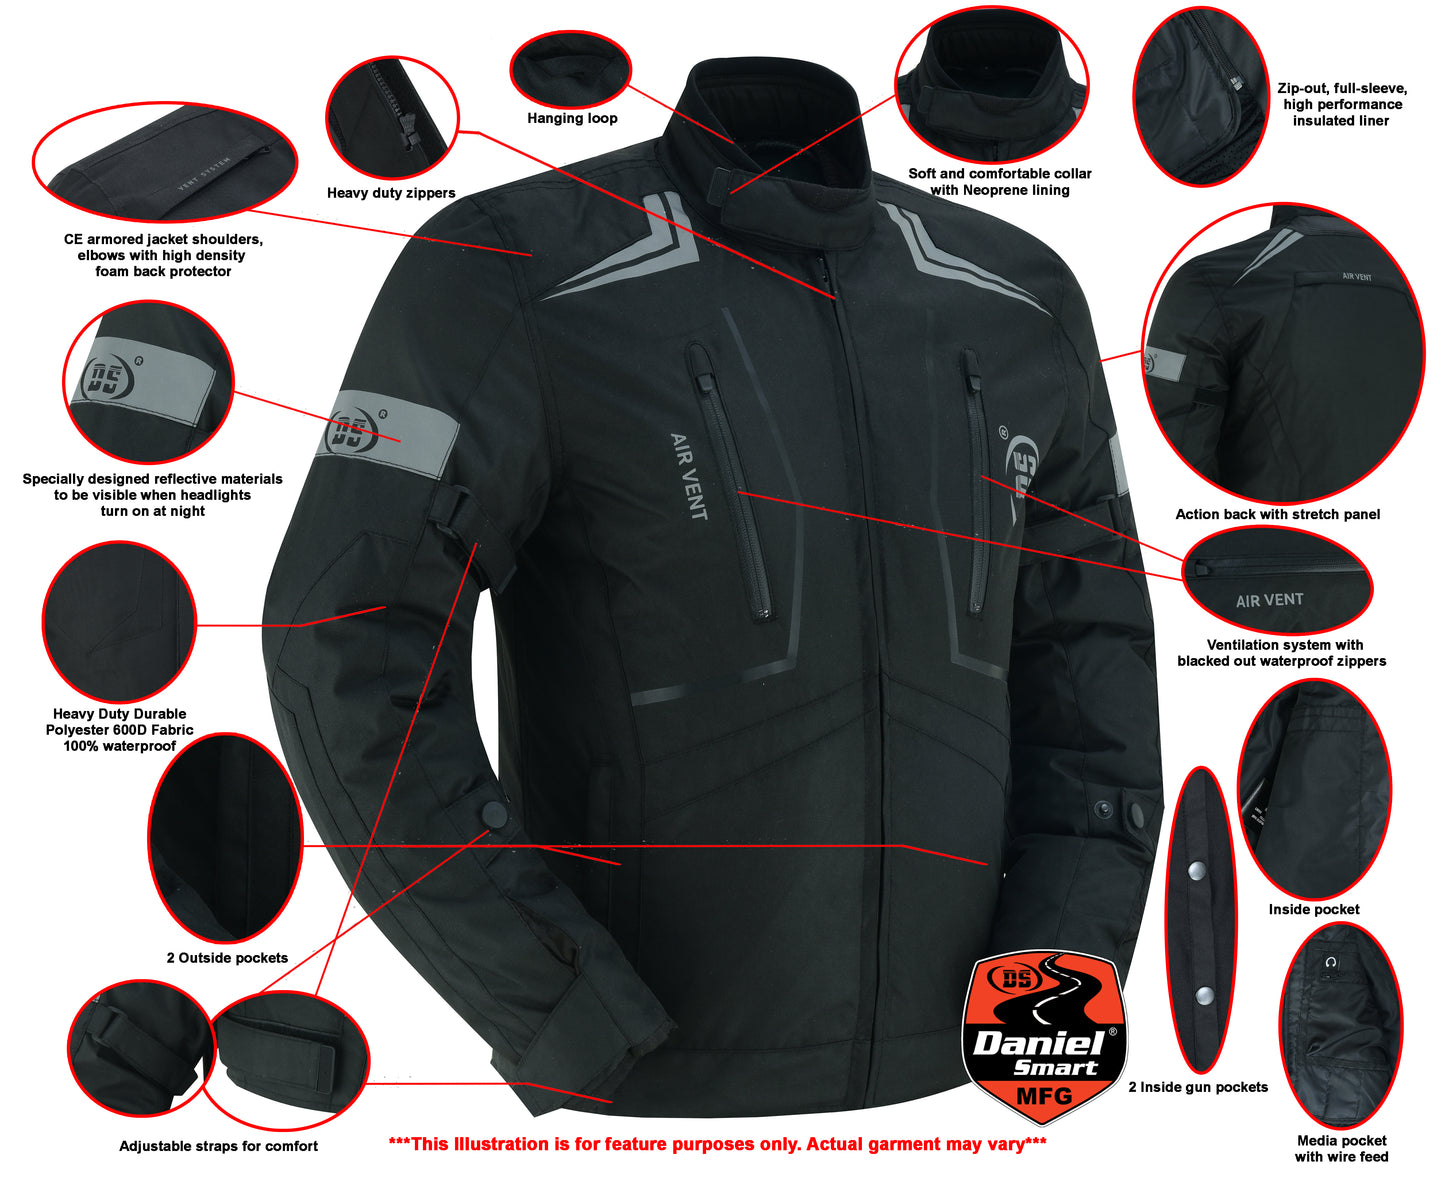 Flight Wings - Black Textile Motorcycle Jacket for Men